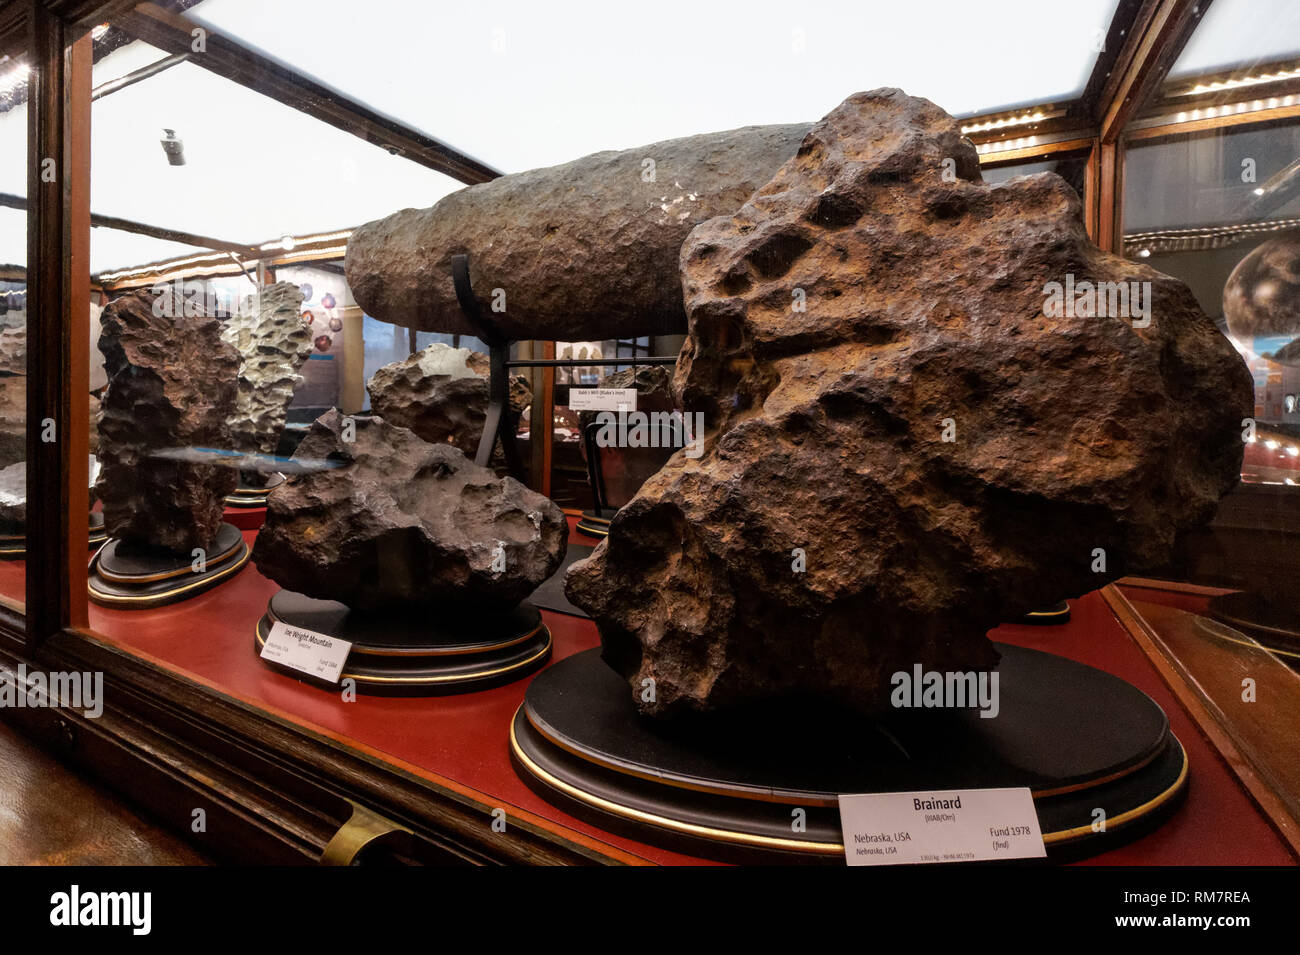 3 MARS ROCK DISPLAY MARTIAN METEORITE MUSEUM EDITION Jumbo Display+Easel 